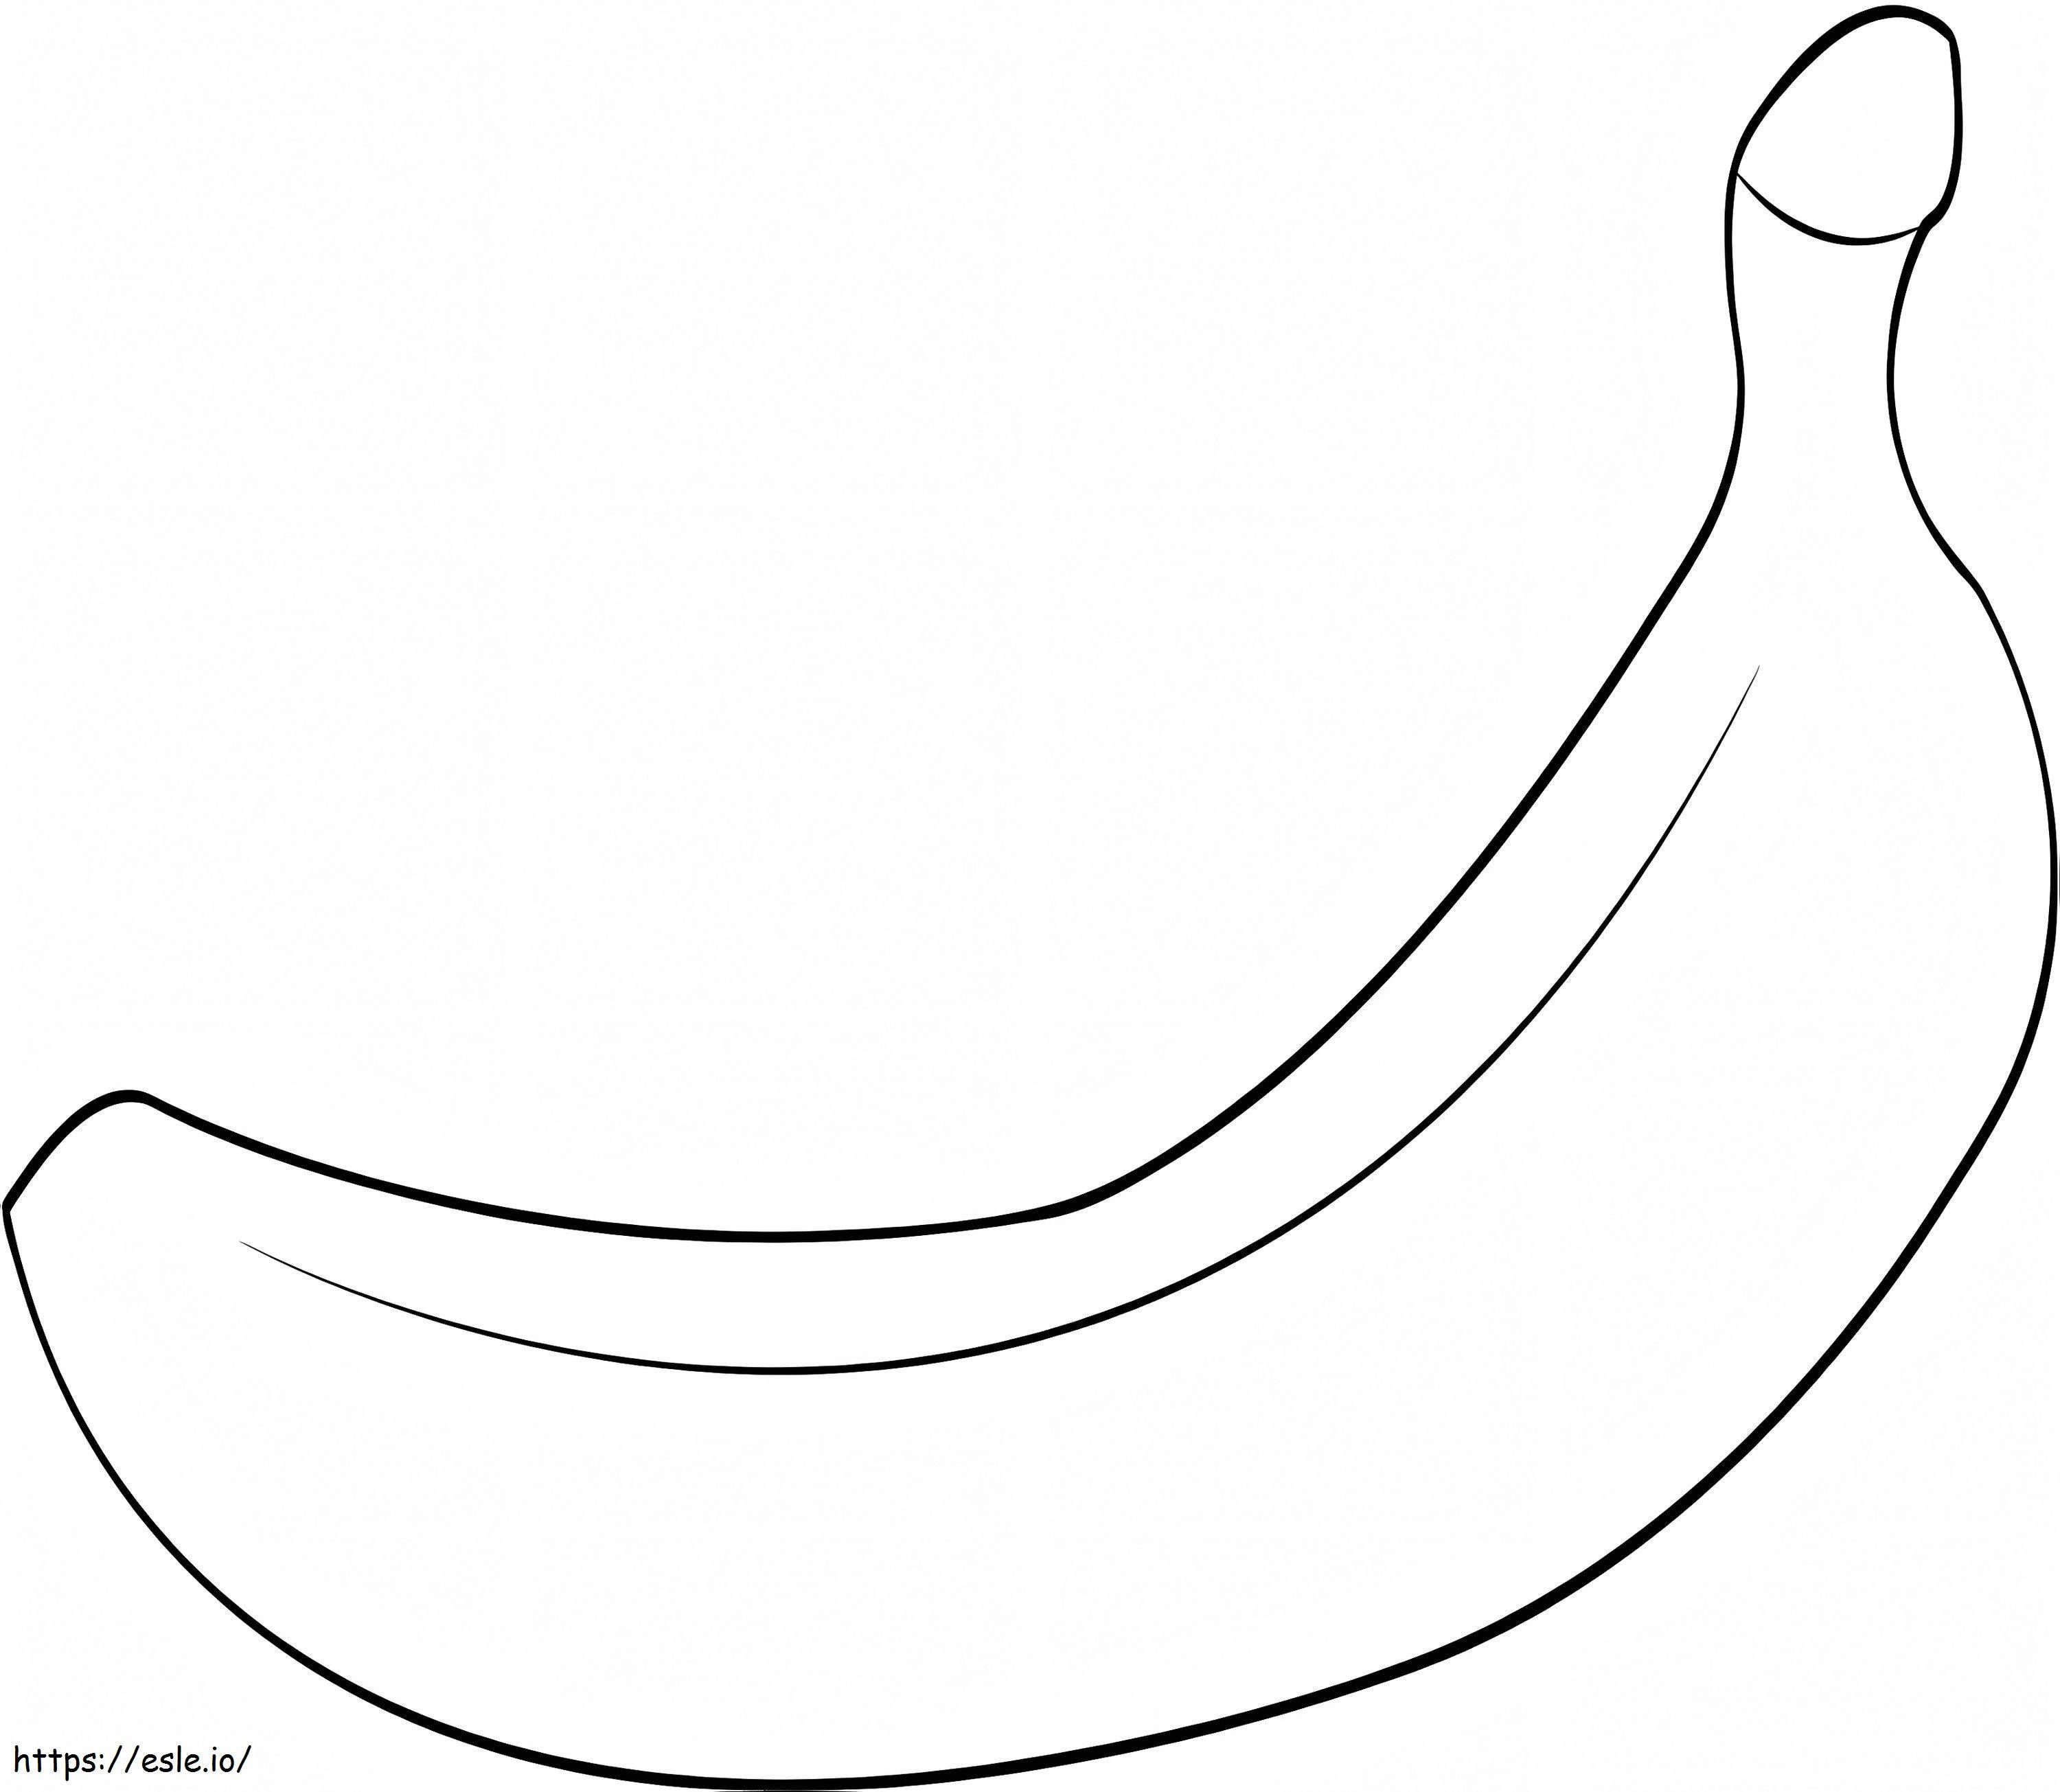 Upea banaani värityskuva